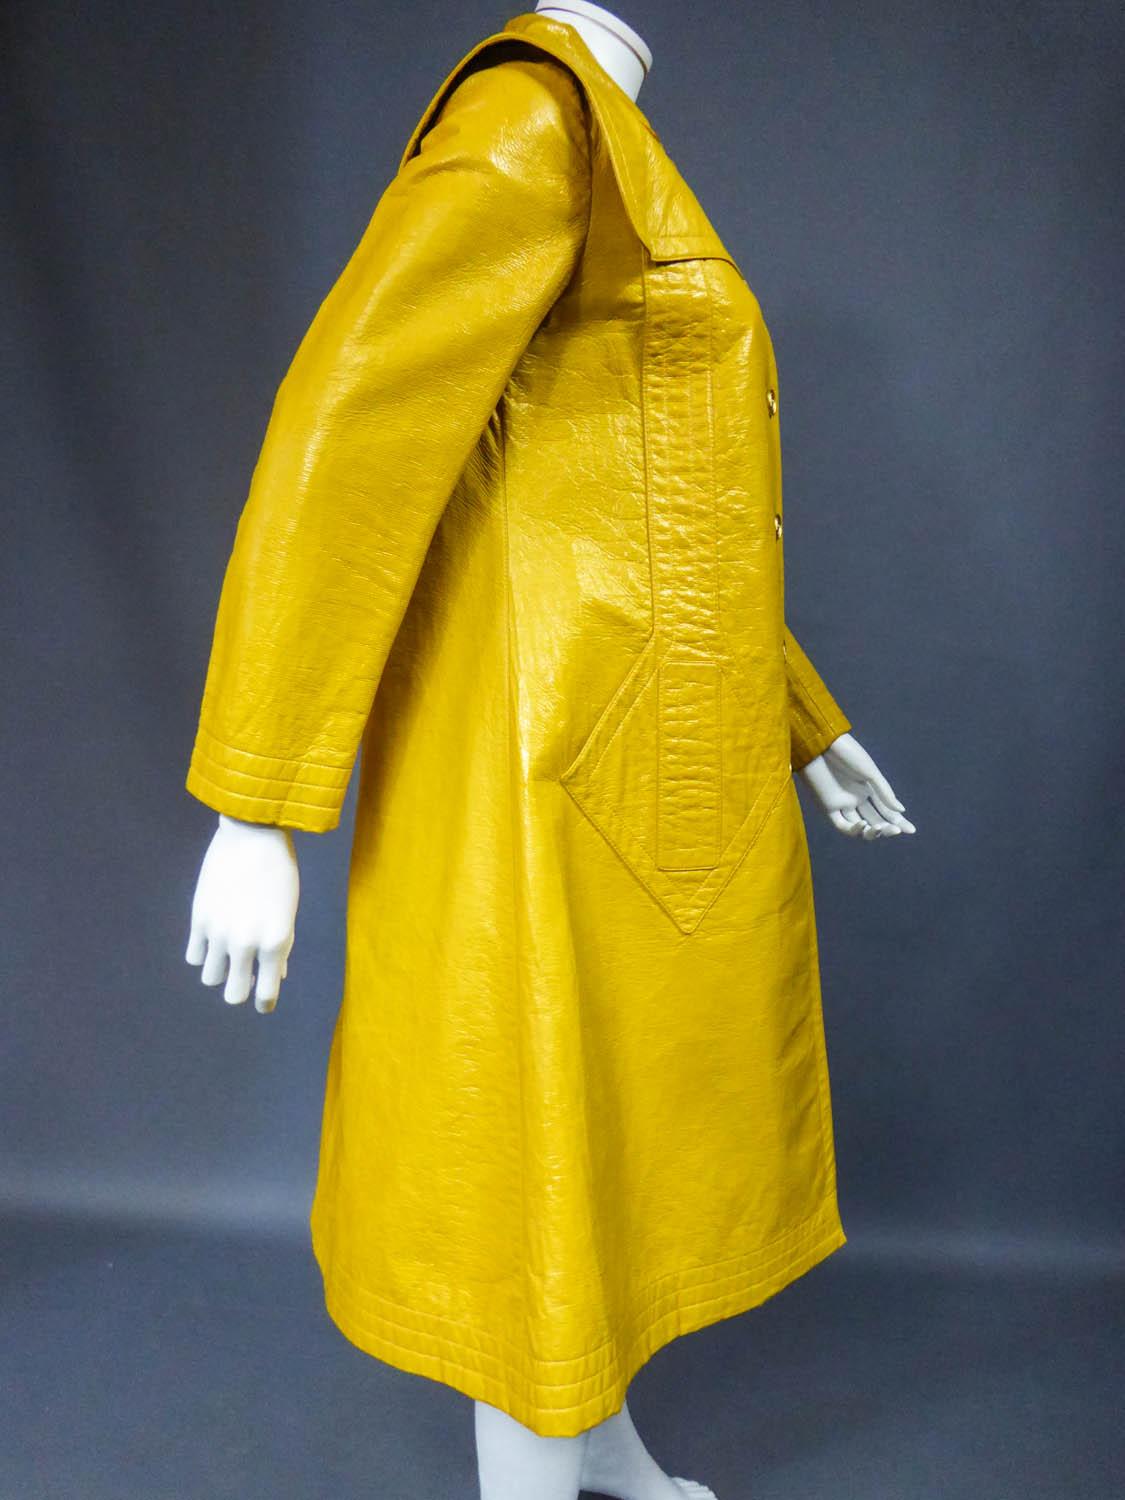 Pierre Cardin Modernist Coat in Mustard Yellow Vinyl Circa 1970 3